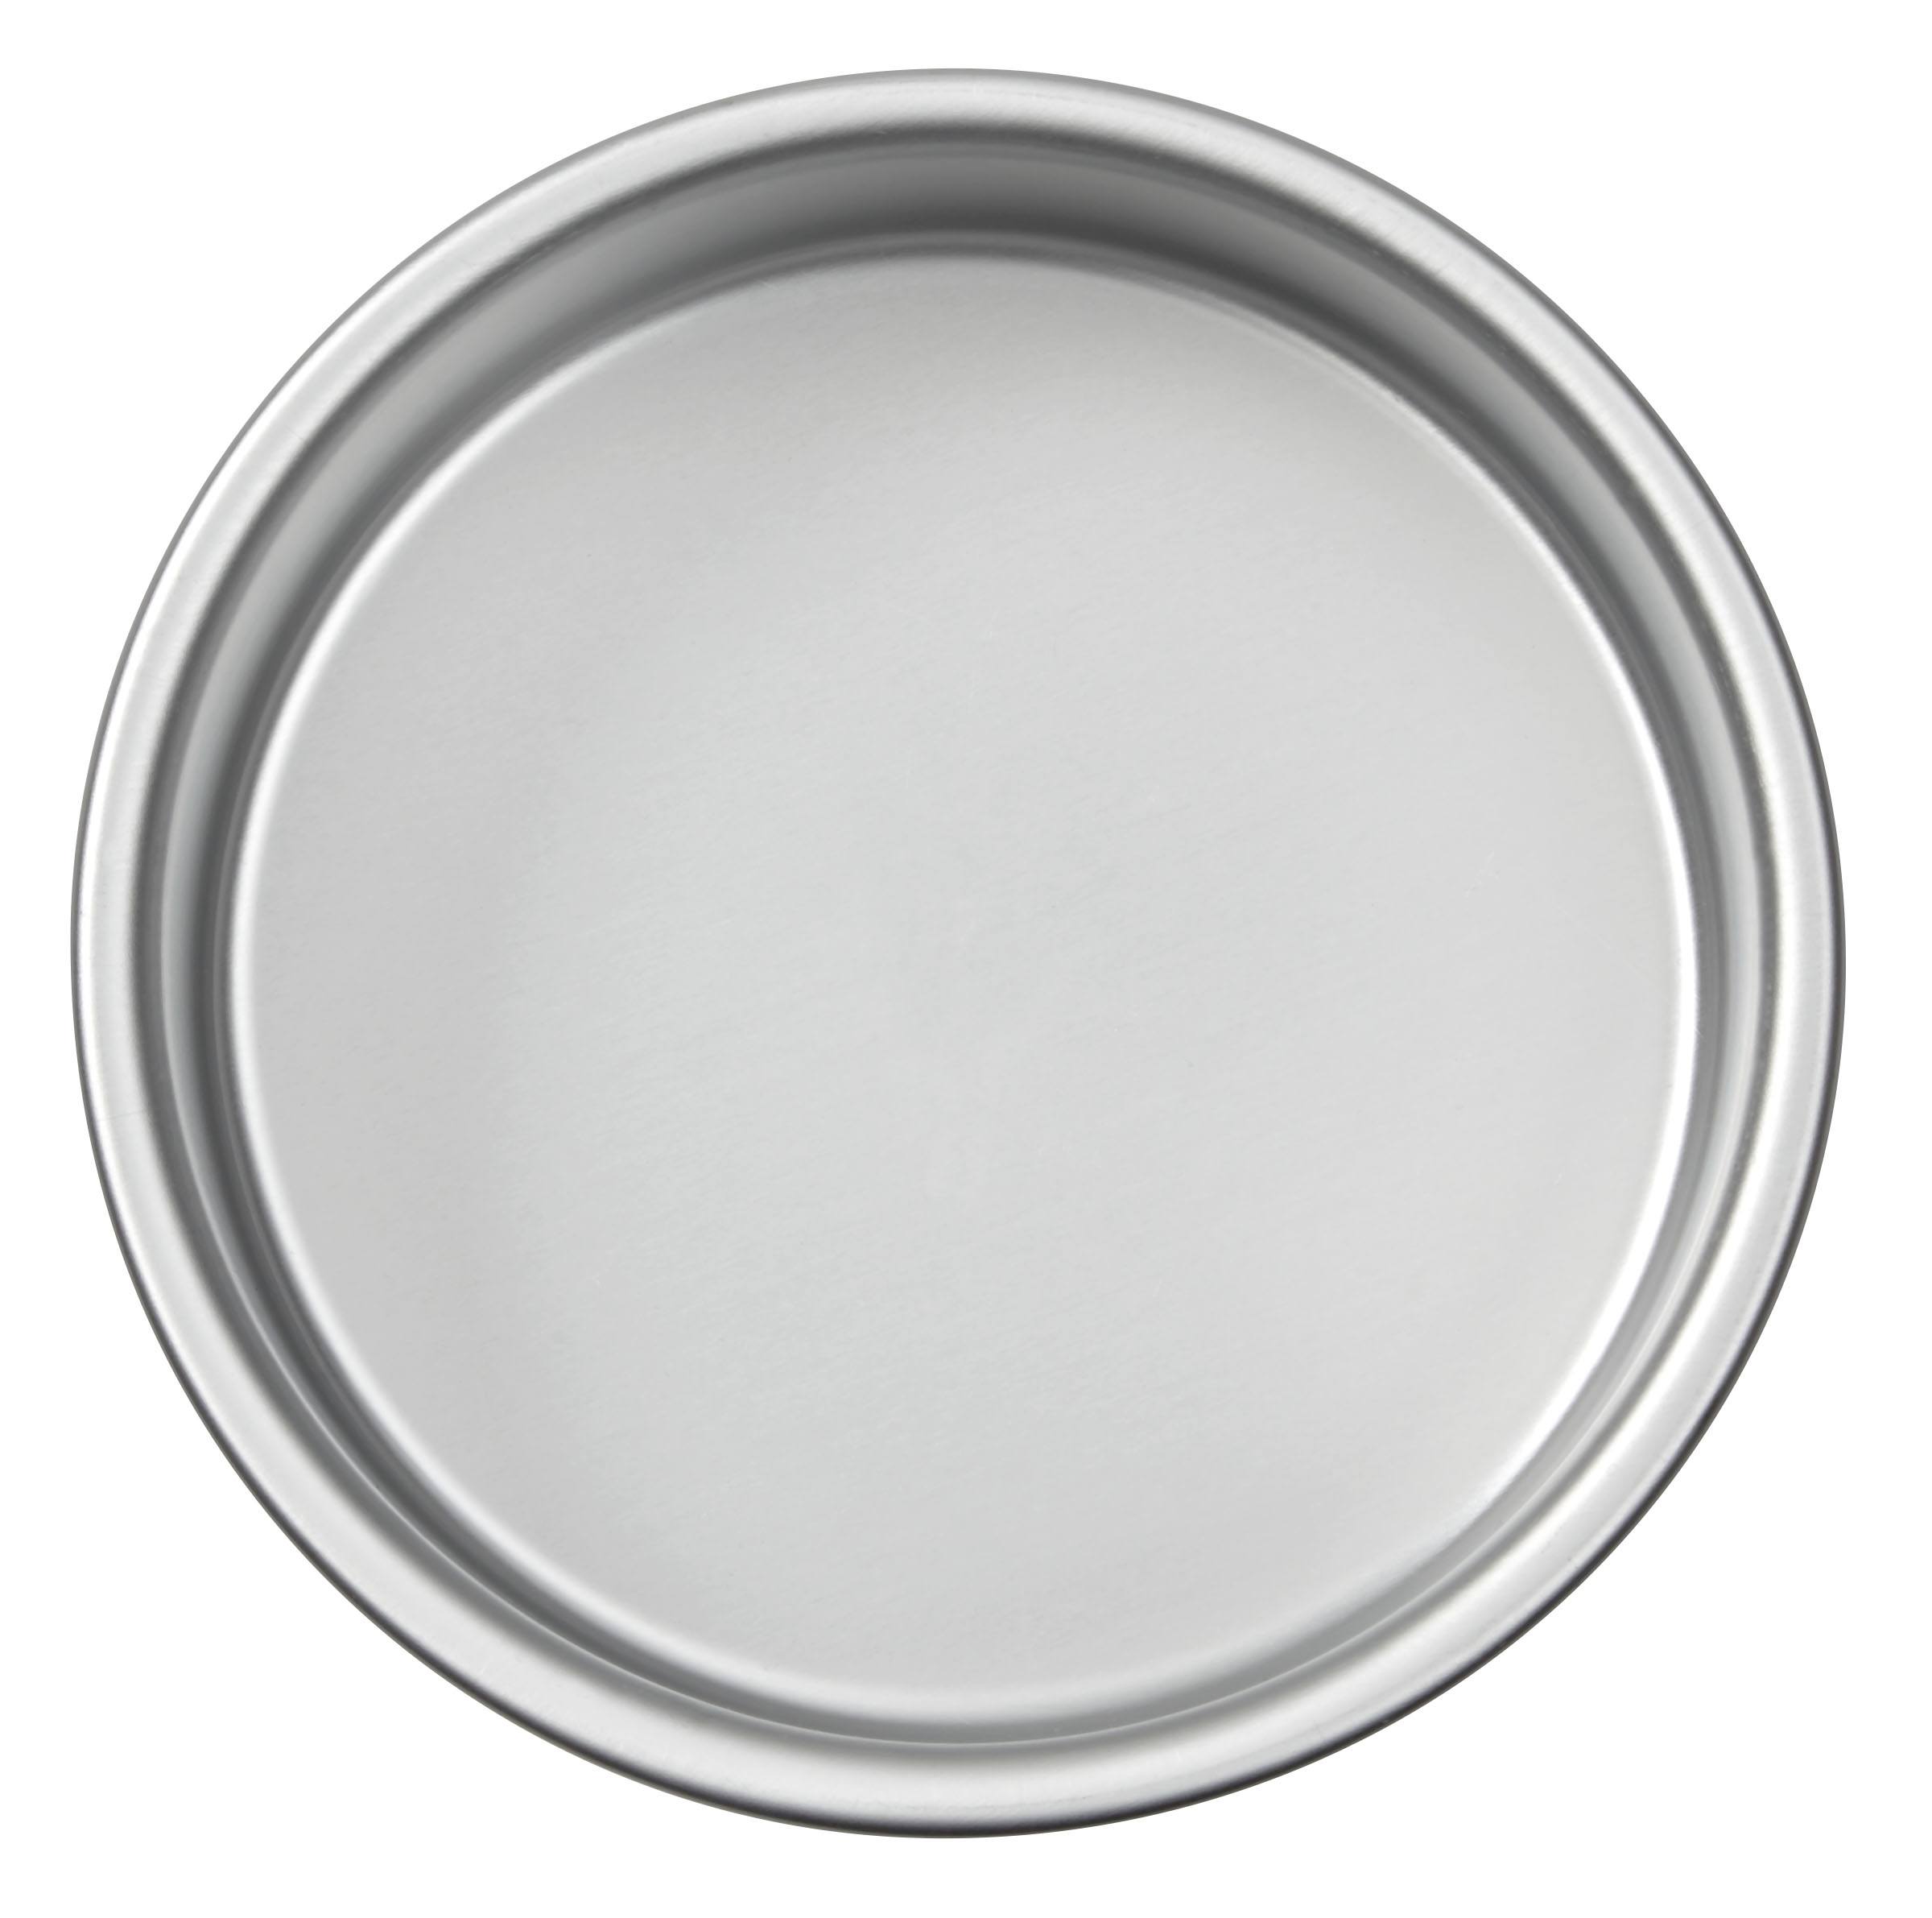 Wilton Performance Pans Round Aluminum 6-Inch Cak Pan - image 1 of 7